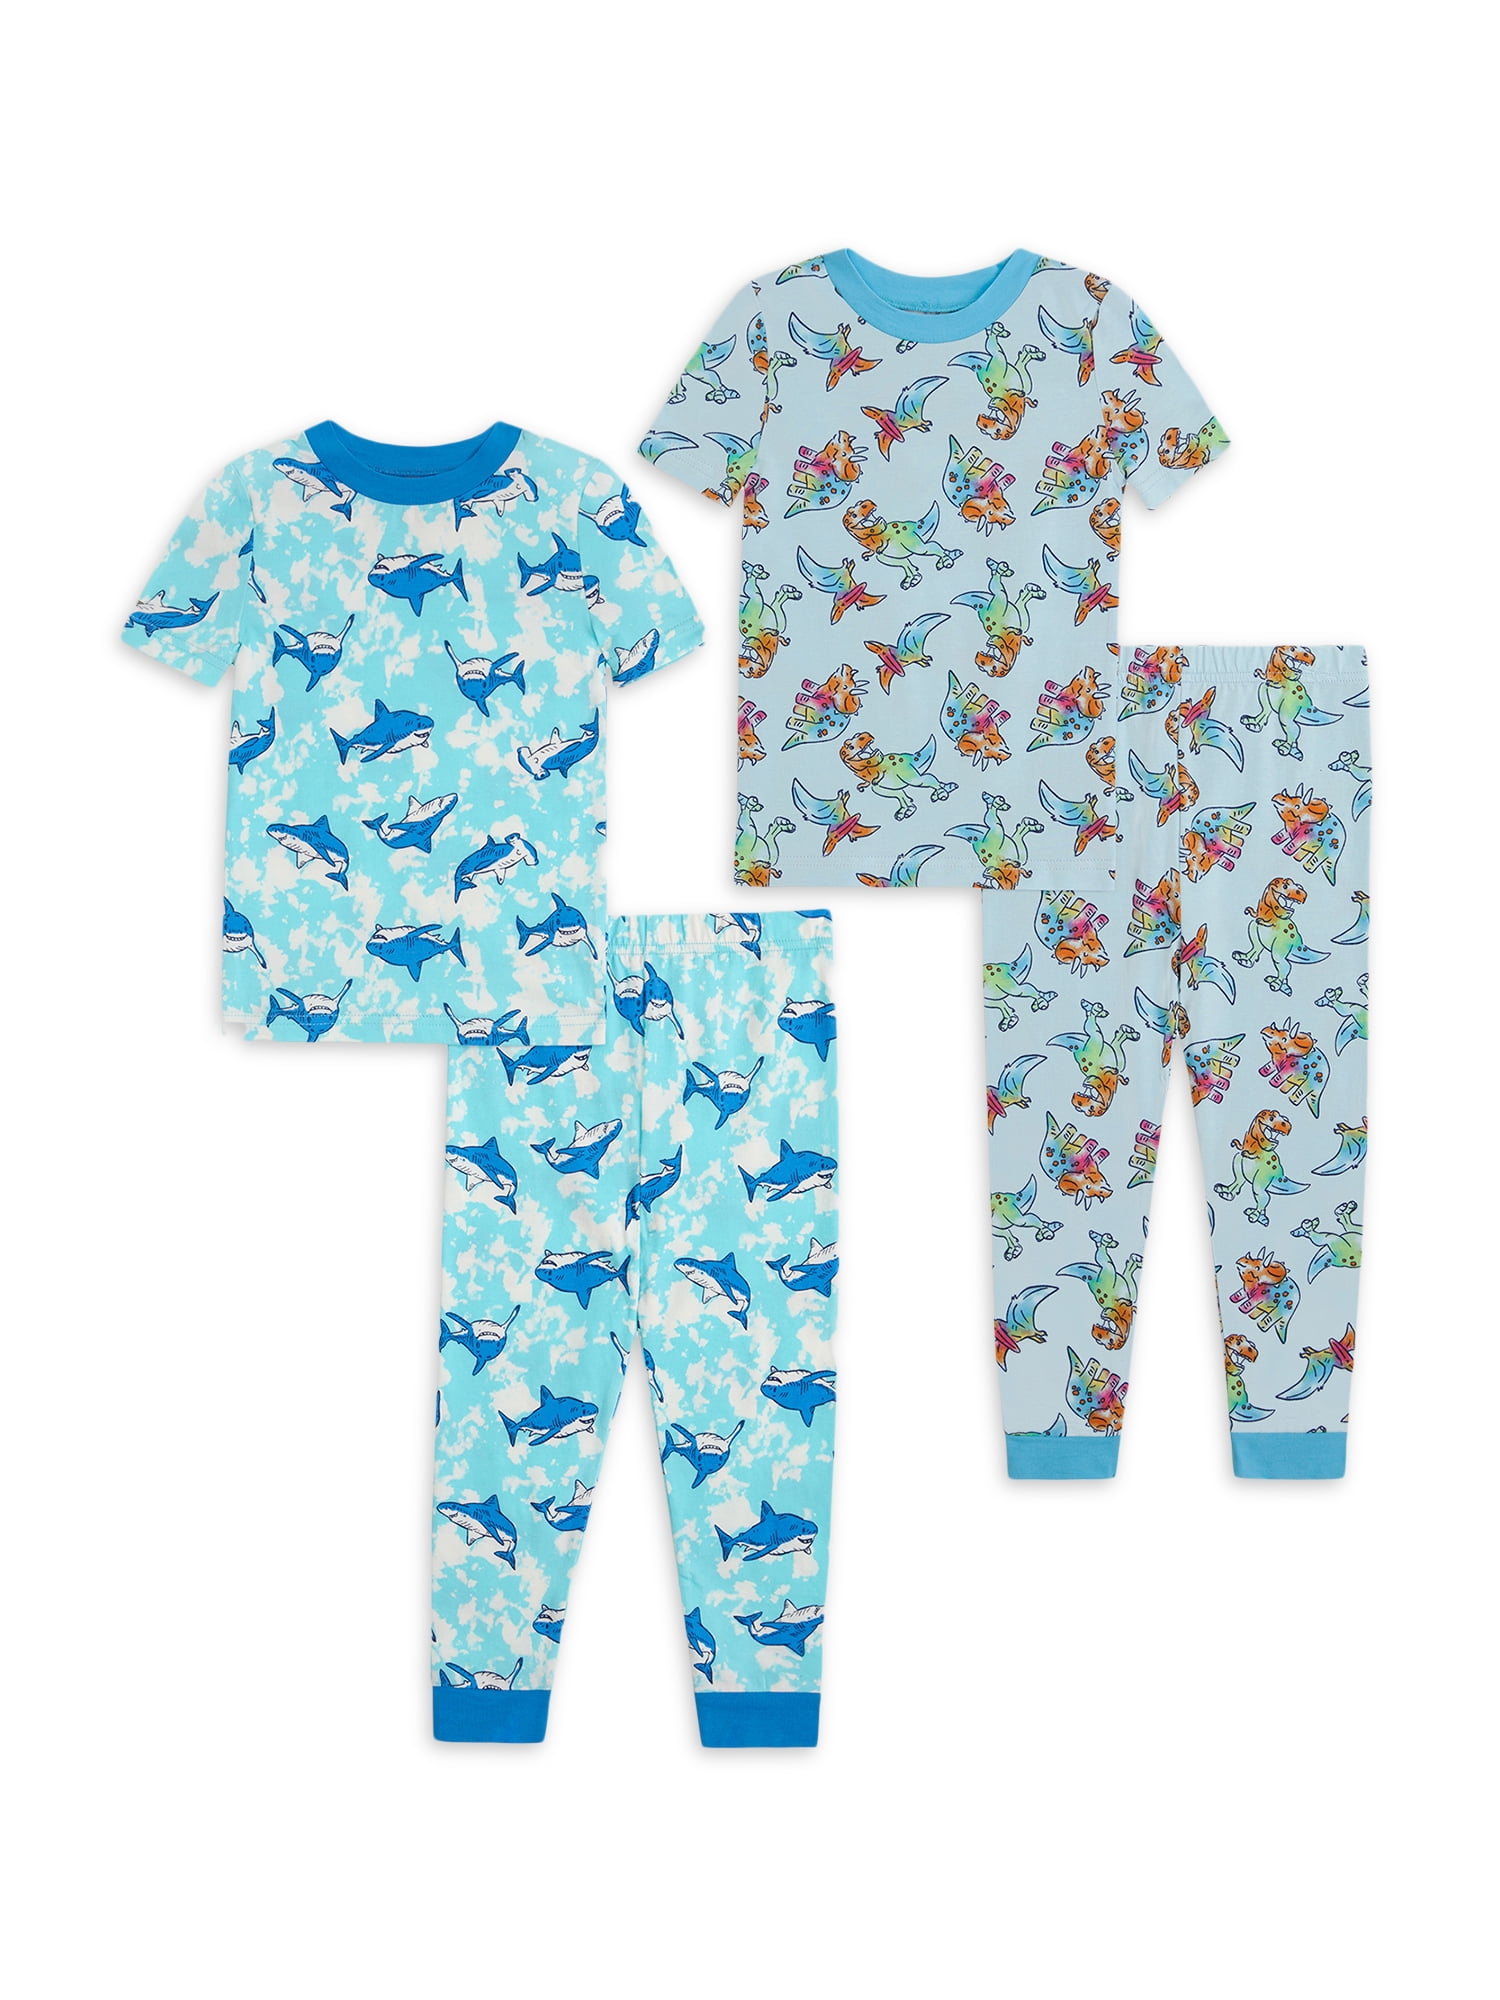 Saint Eve Baby and Toddler Boys Short Sleeve Snug Fit Cotton Pajamas, 4pc  Set (12M-5T) - Walmart.com